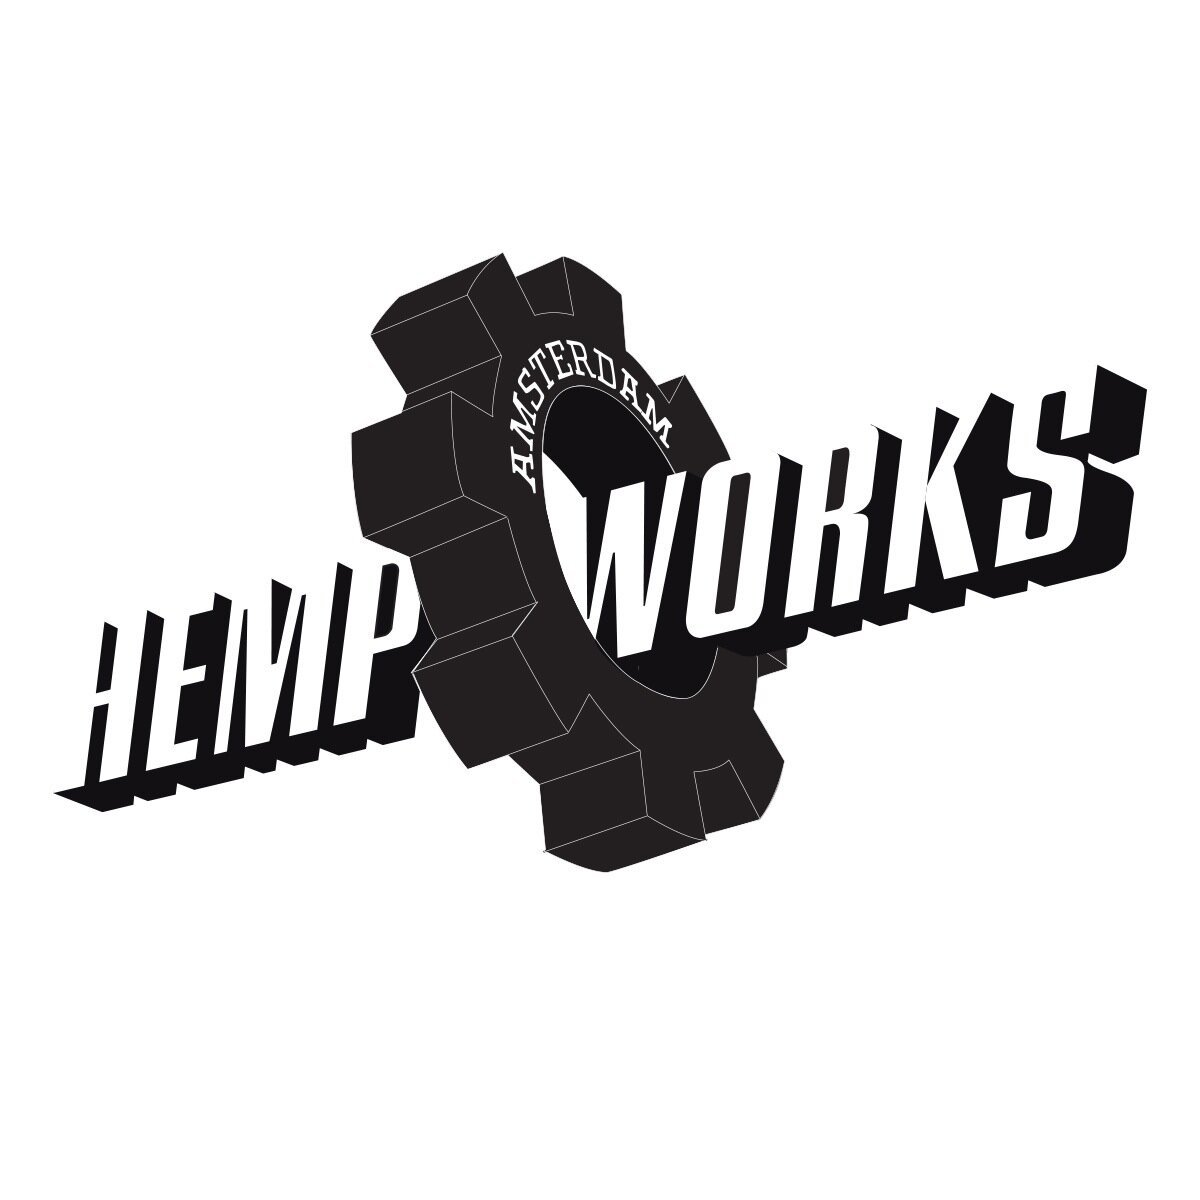 Hemp Works, the latest news on hemp clothing, food and more. Follow @hemphoodlamb for the latest news and deals on HoodLamb.